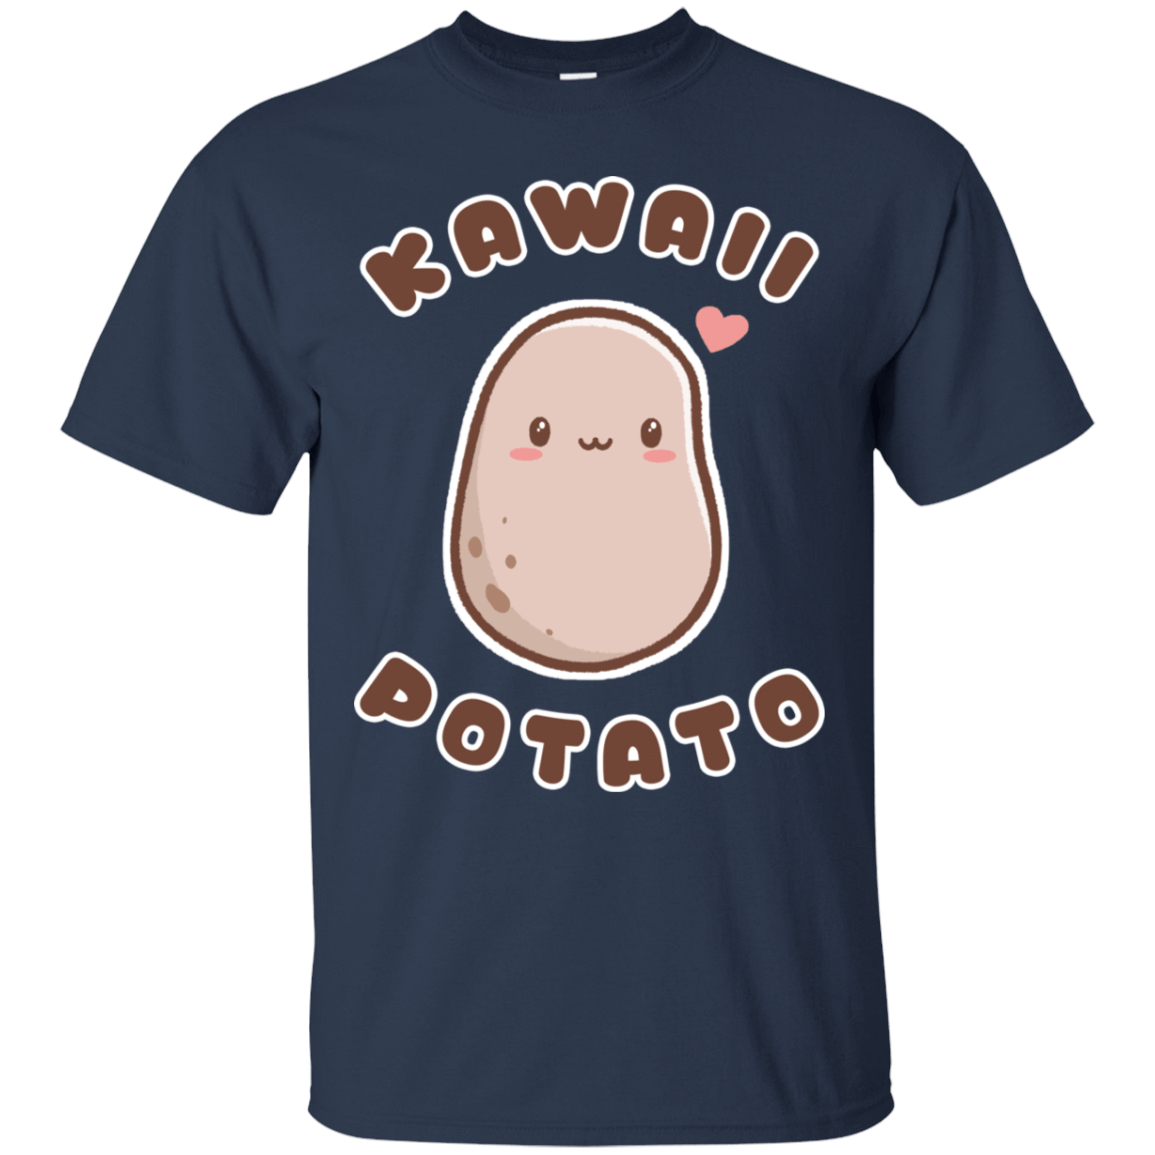 T-Shirts Navy / S Kawaii Potato T-Shirt